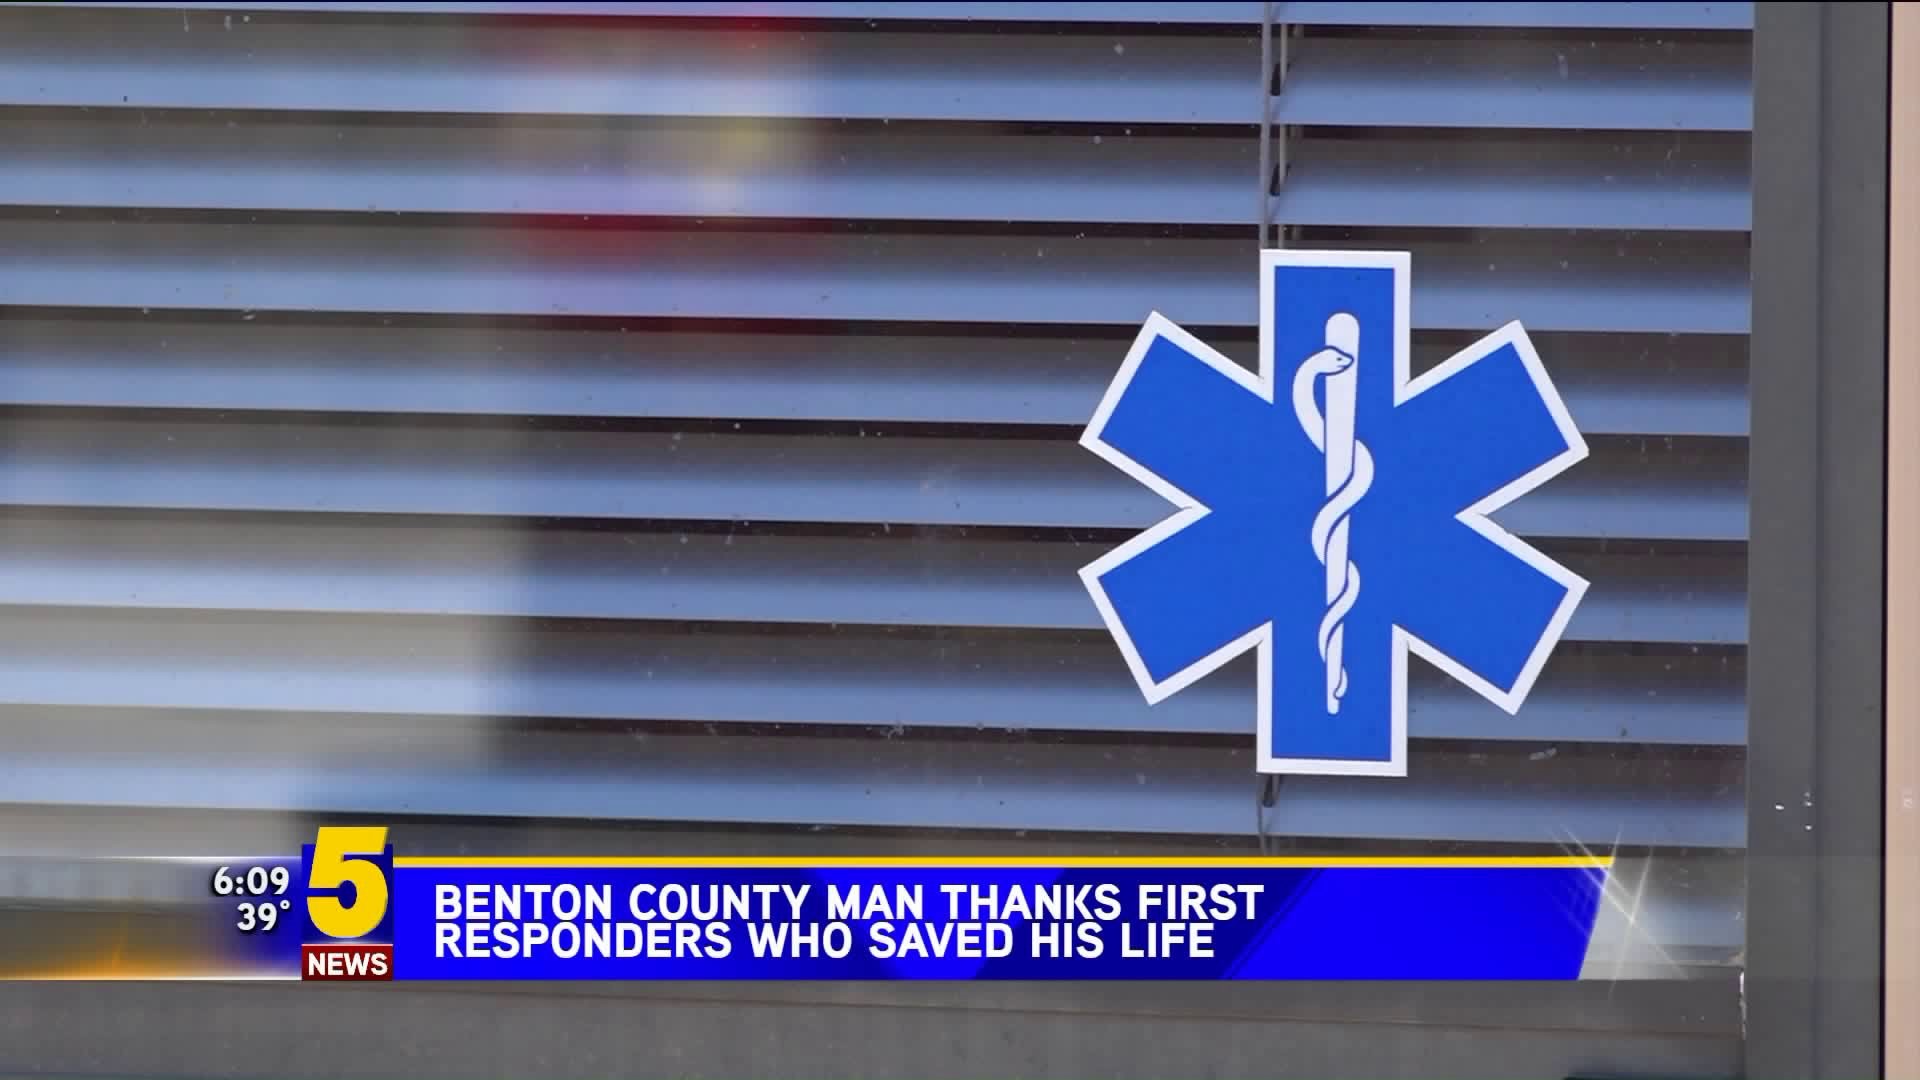 Benton County Man Thanks First Responders Who Saved His Life